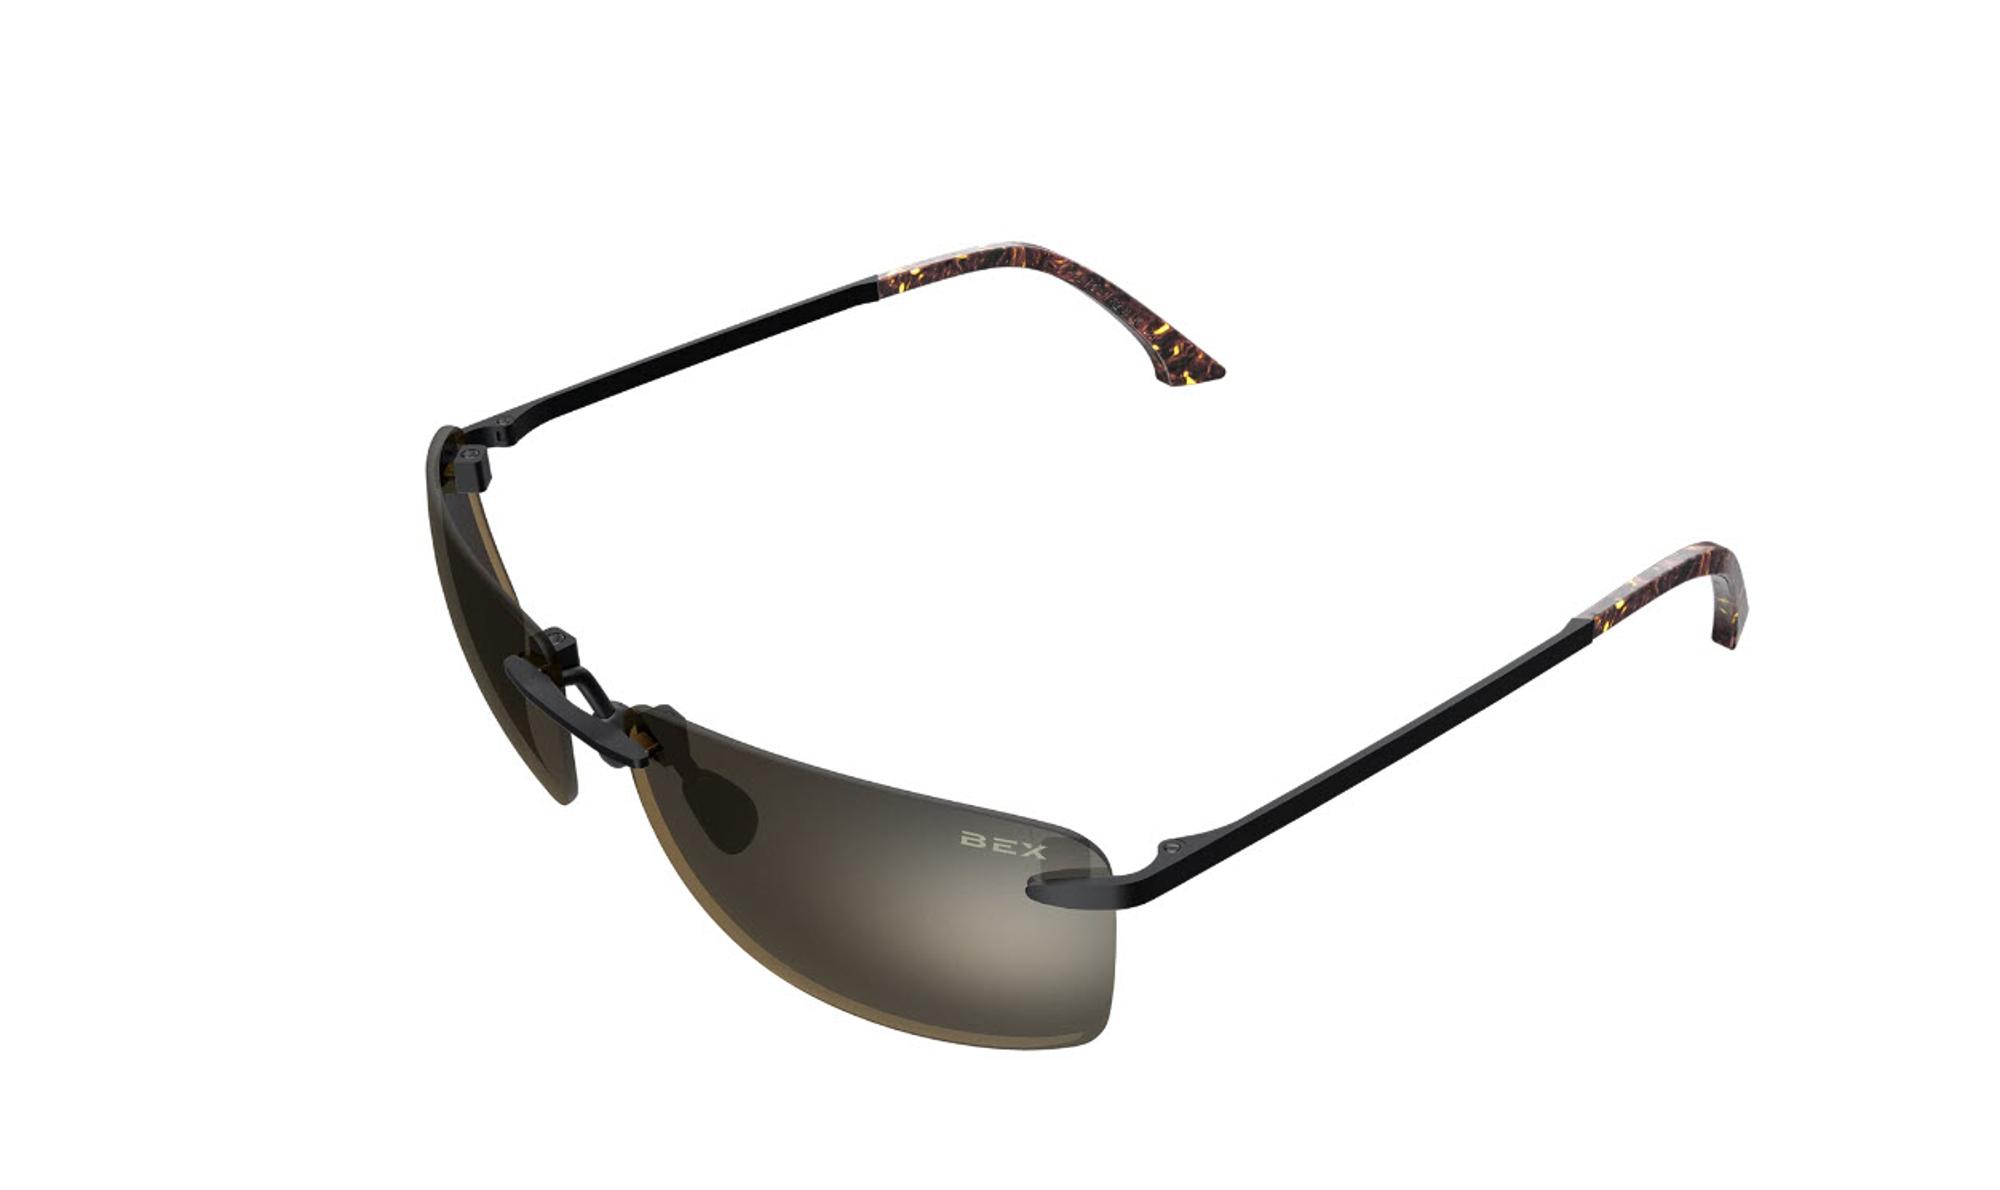 Bex Legolas Black and Brown Polarized Sunglasses